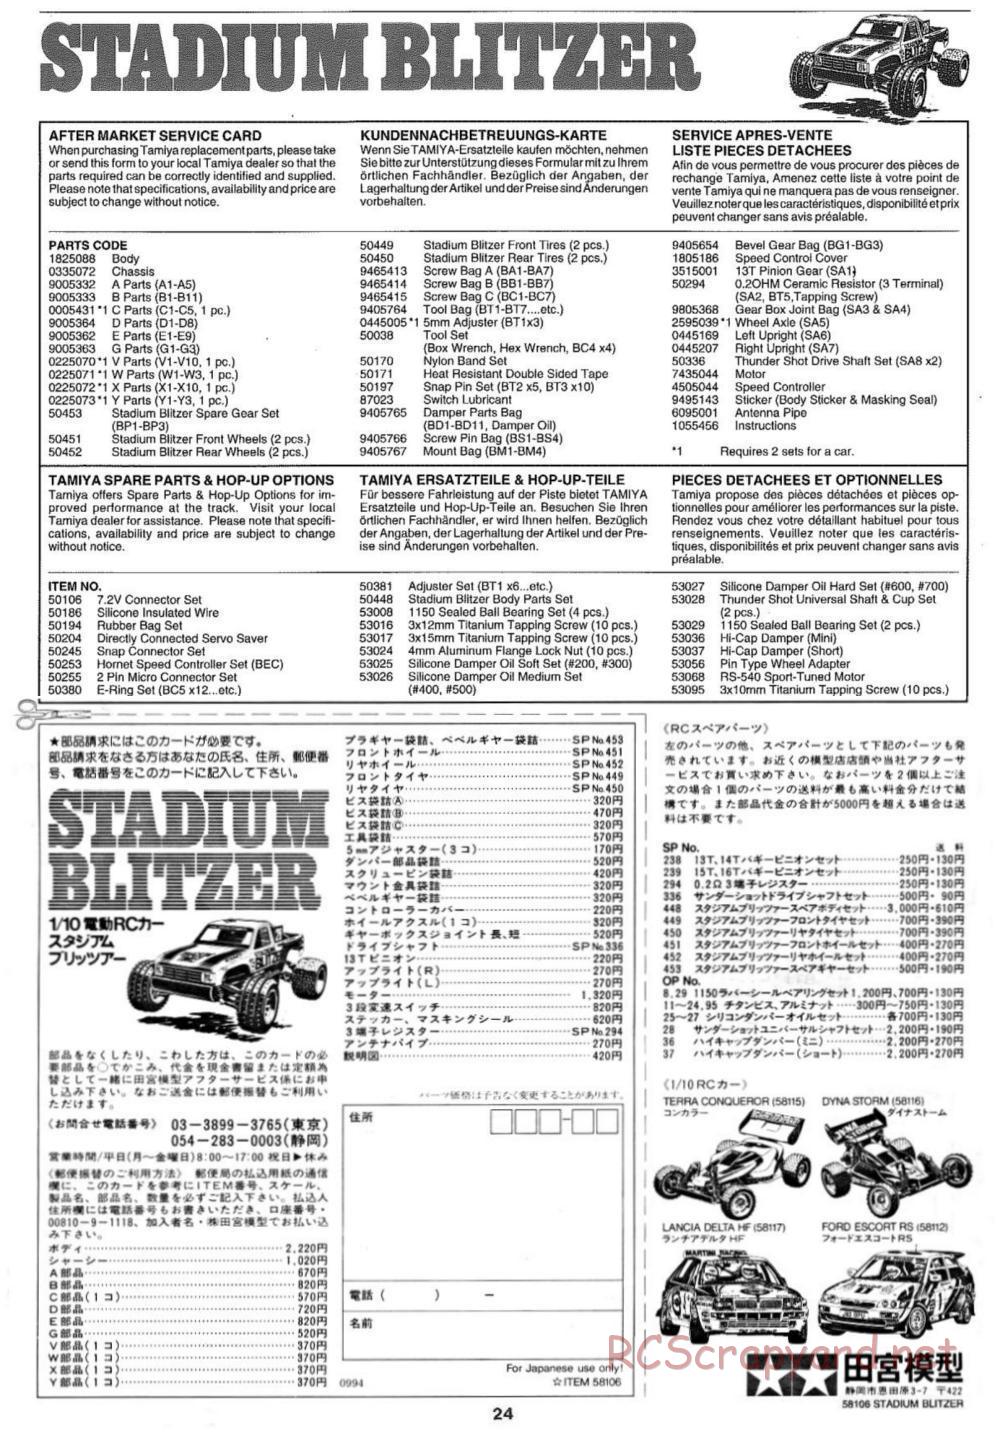 Tamiya - Stadium Blitzer Chassis - Manual - Page 24